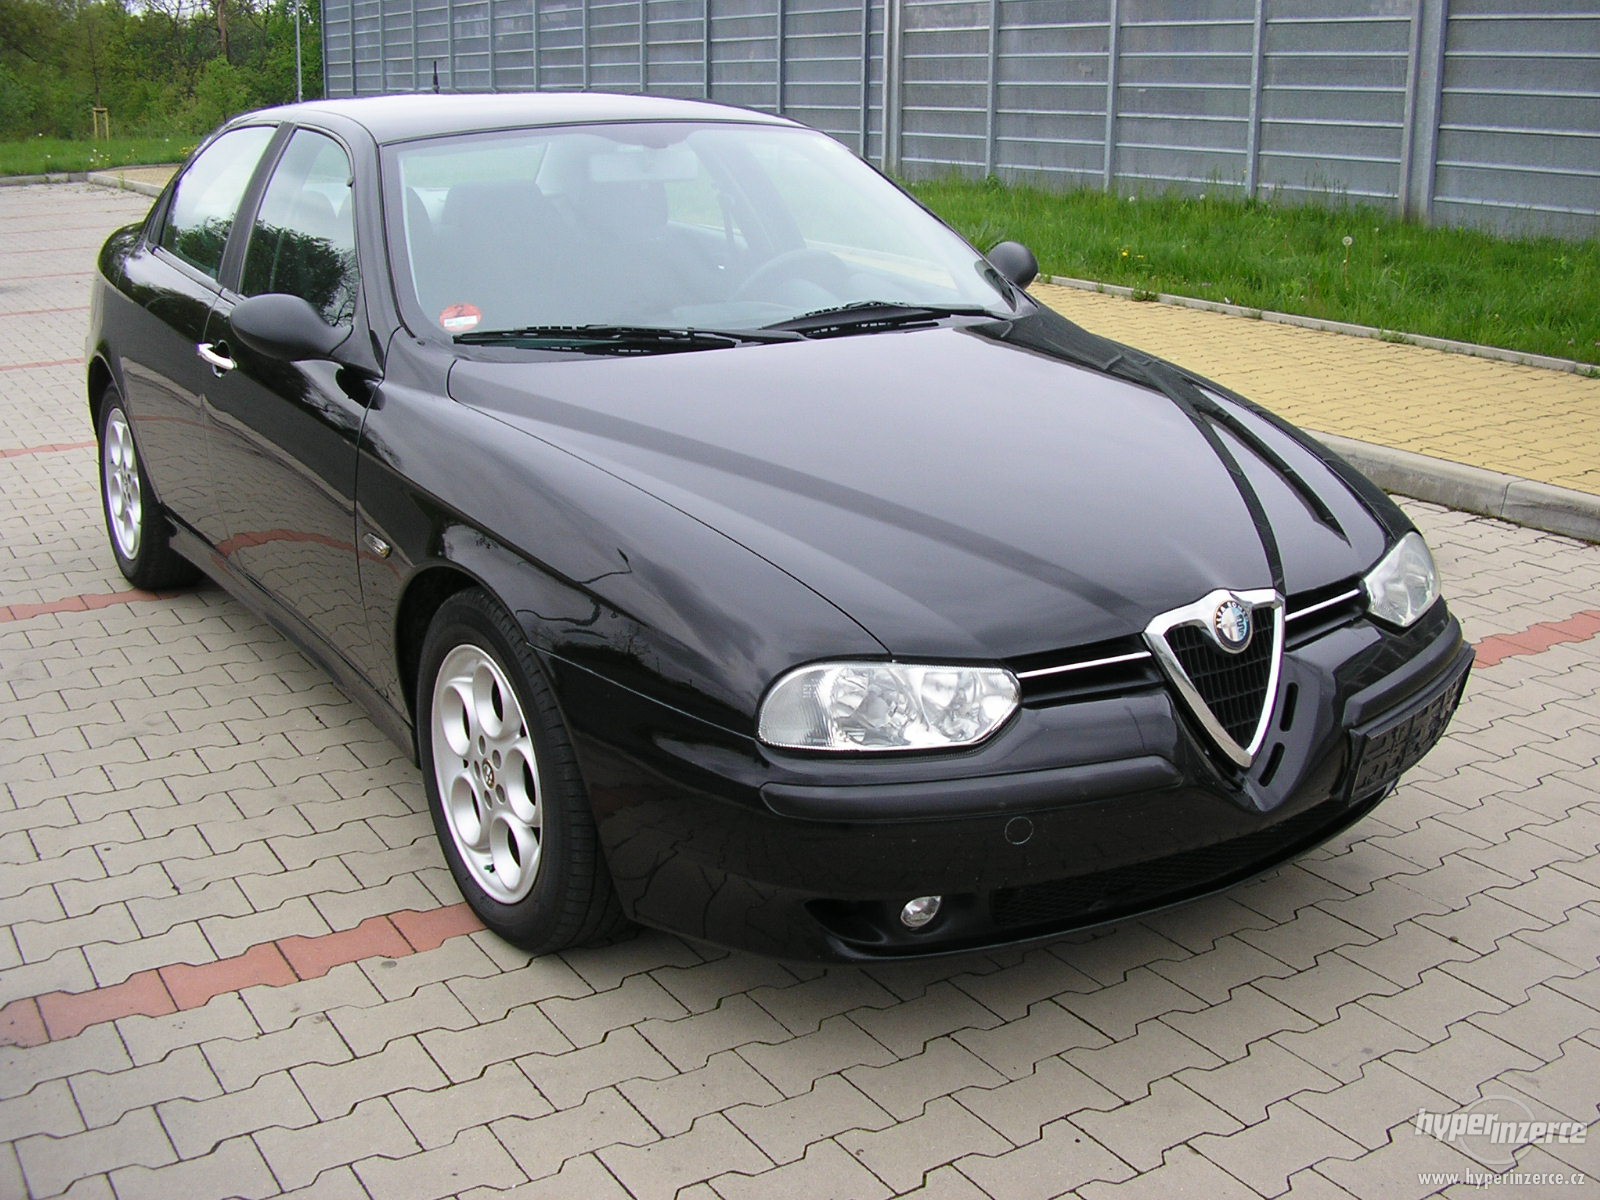 Alfa Romeo 156 2000 autoddata1 